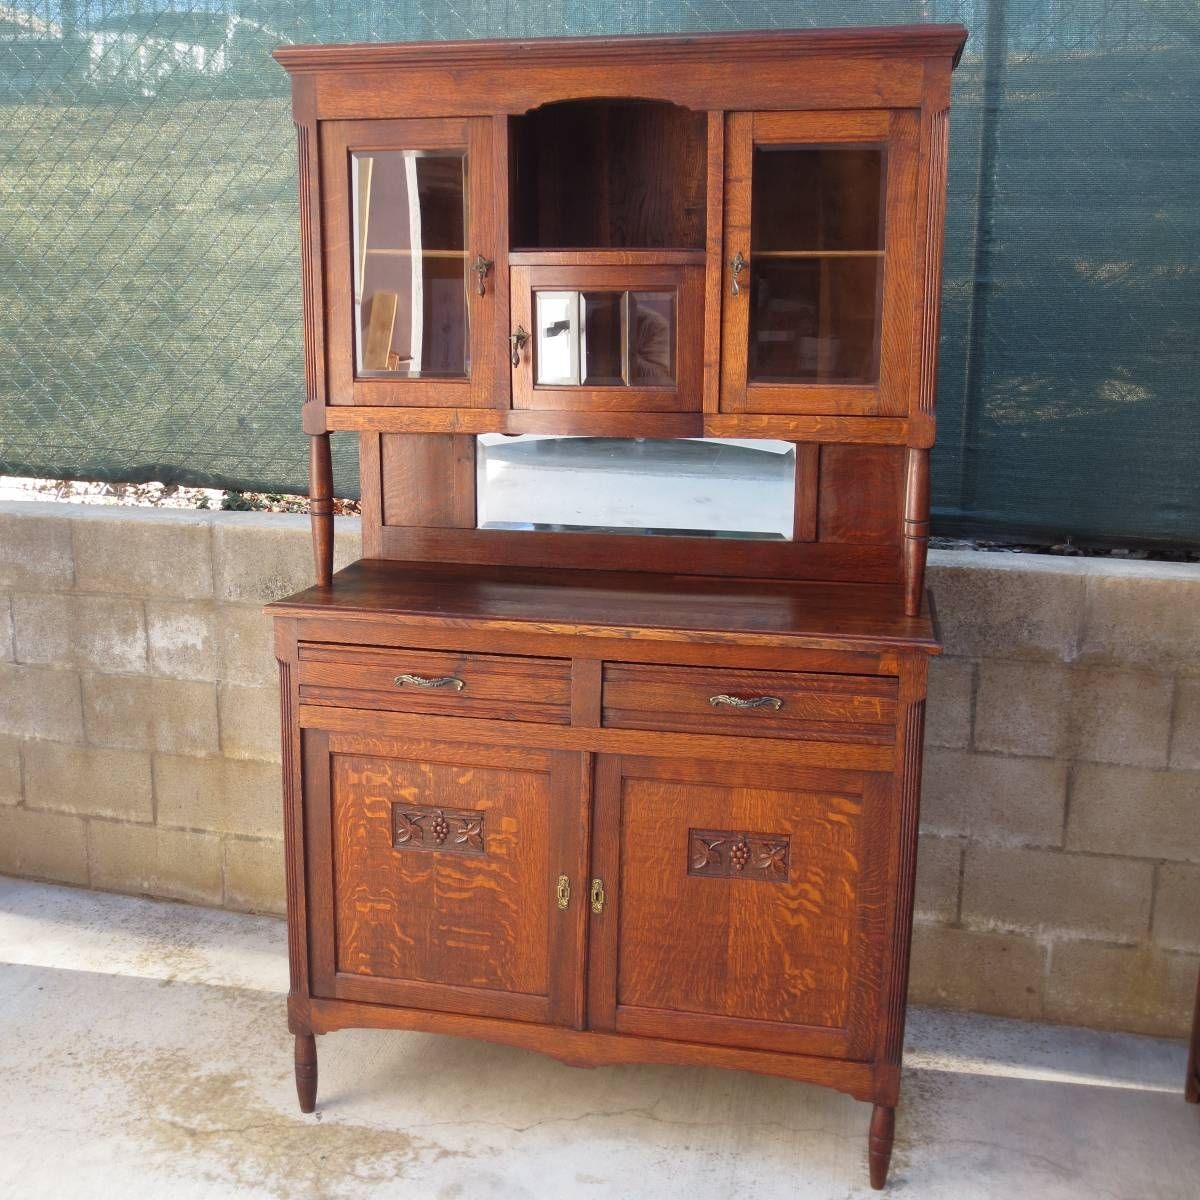 Antique Hutches, Antique Credenzas, Antique Furniture, Antique Regarding Sideboard With Hutch (View 13 of 20)